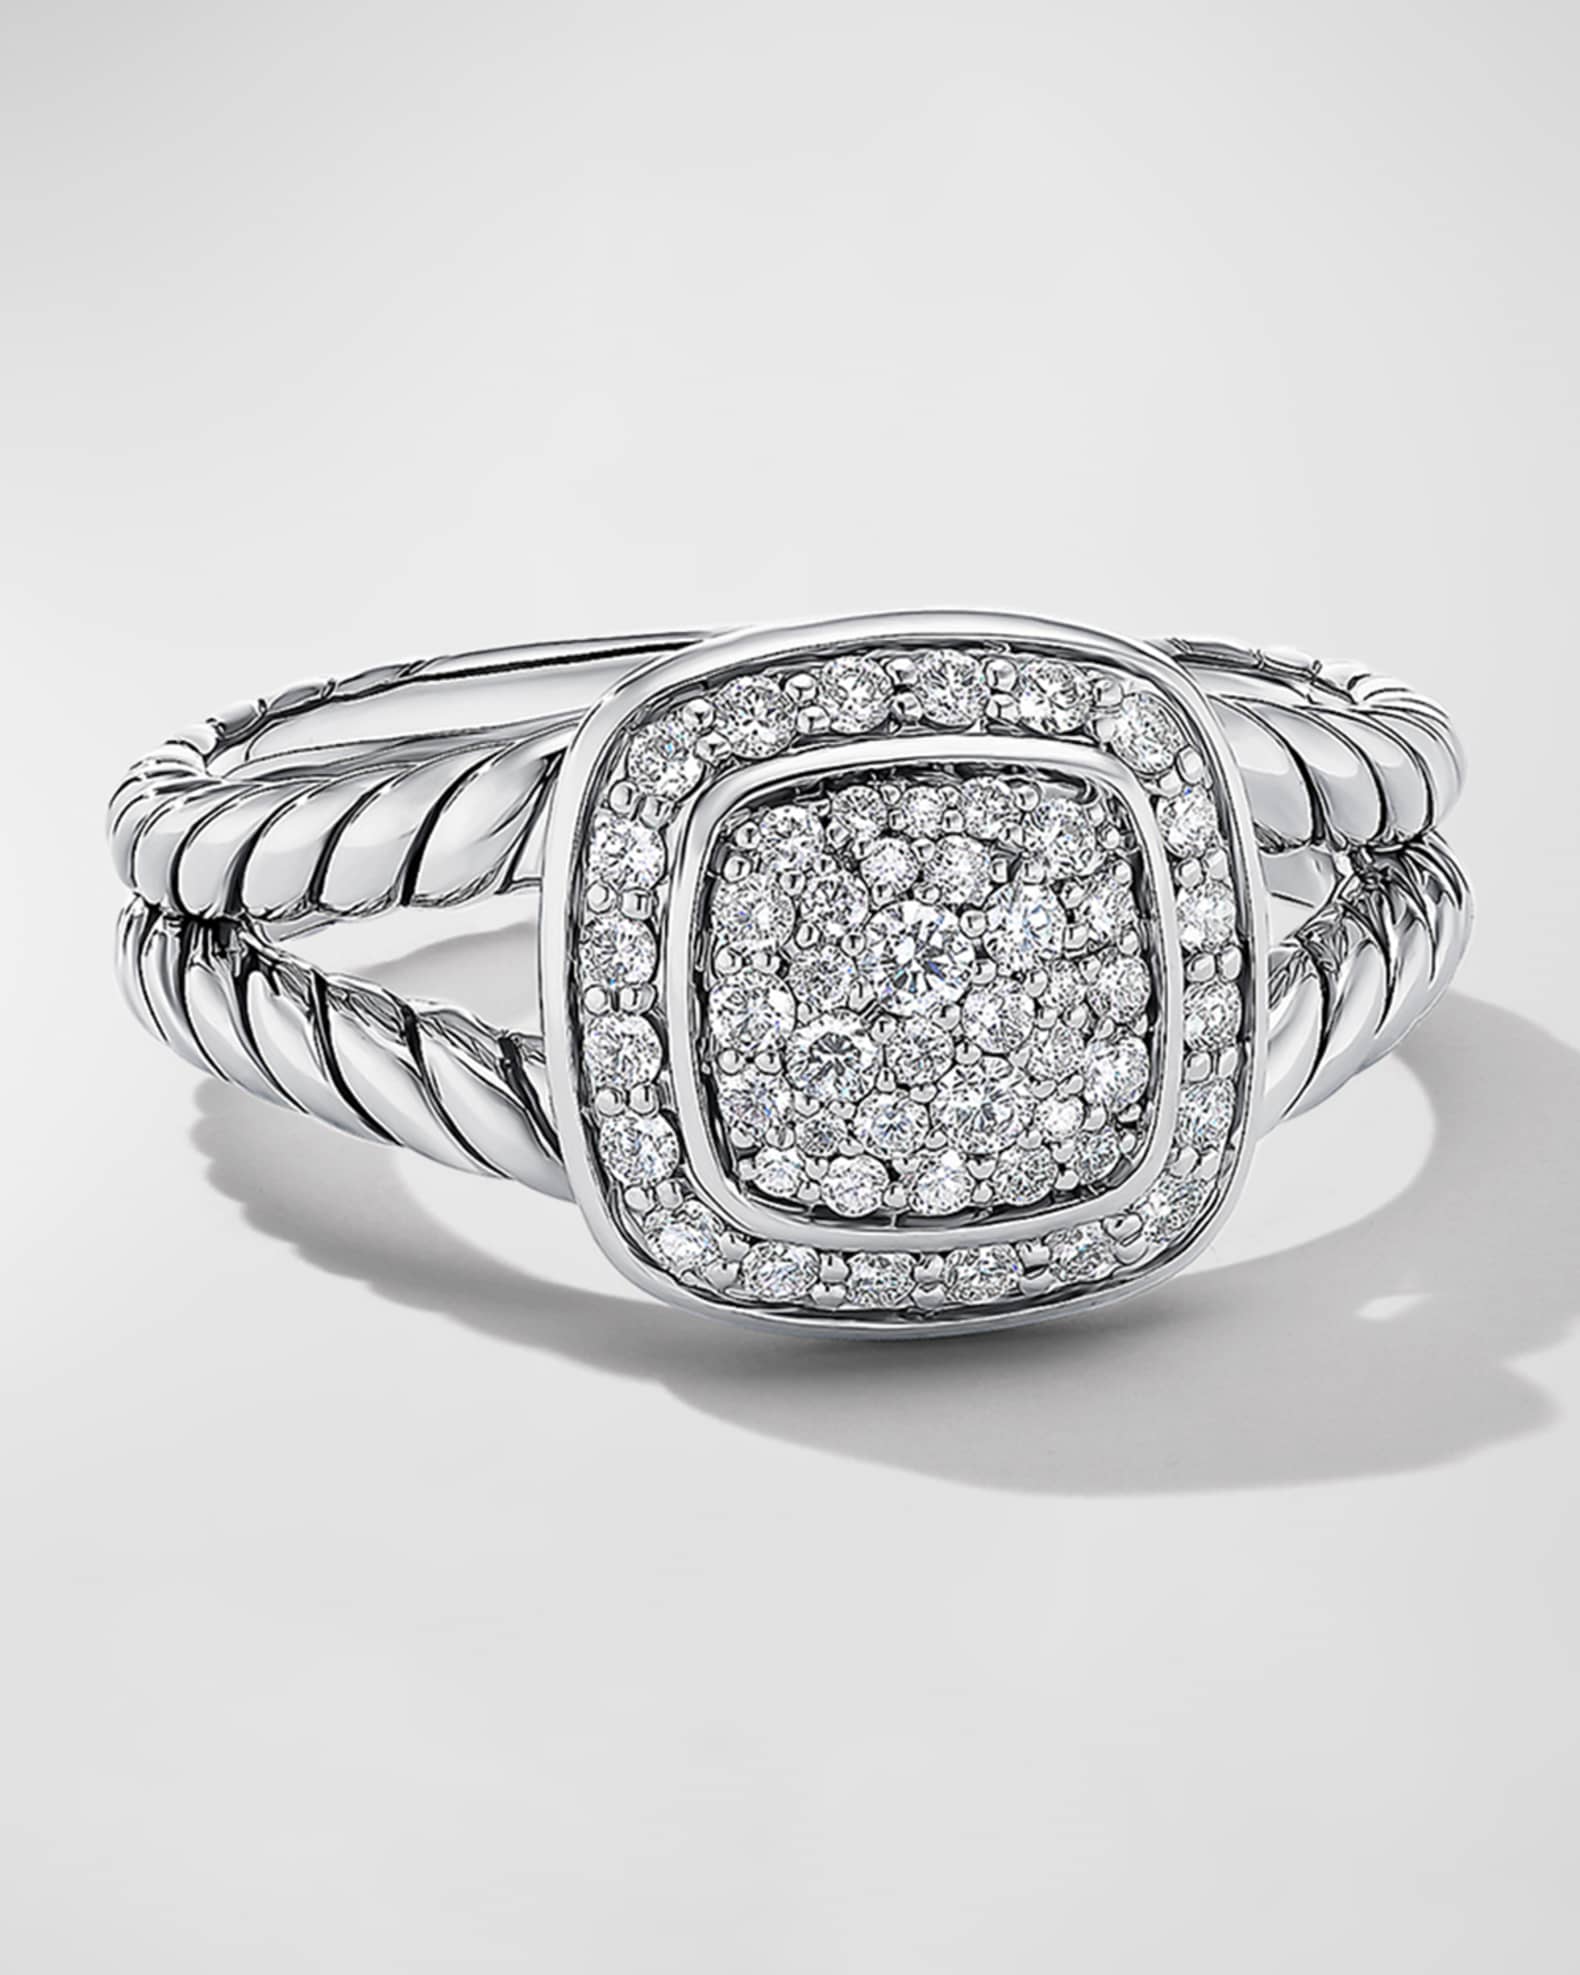 Hub Jeugd natuurpark David Yurman Petite Albion Ring with Diamonds in Silver, 7mm | Neiman Marcus